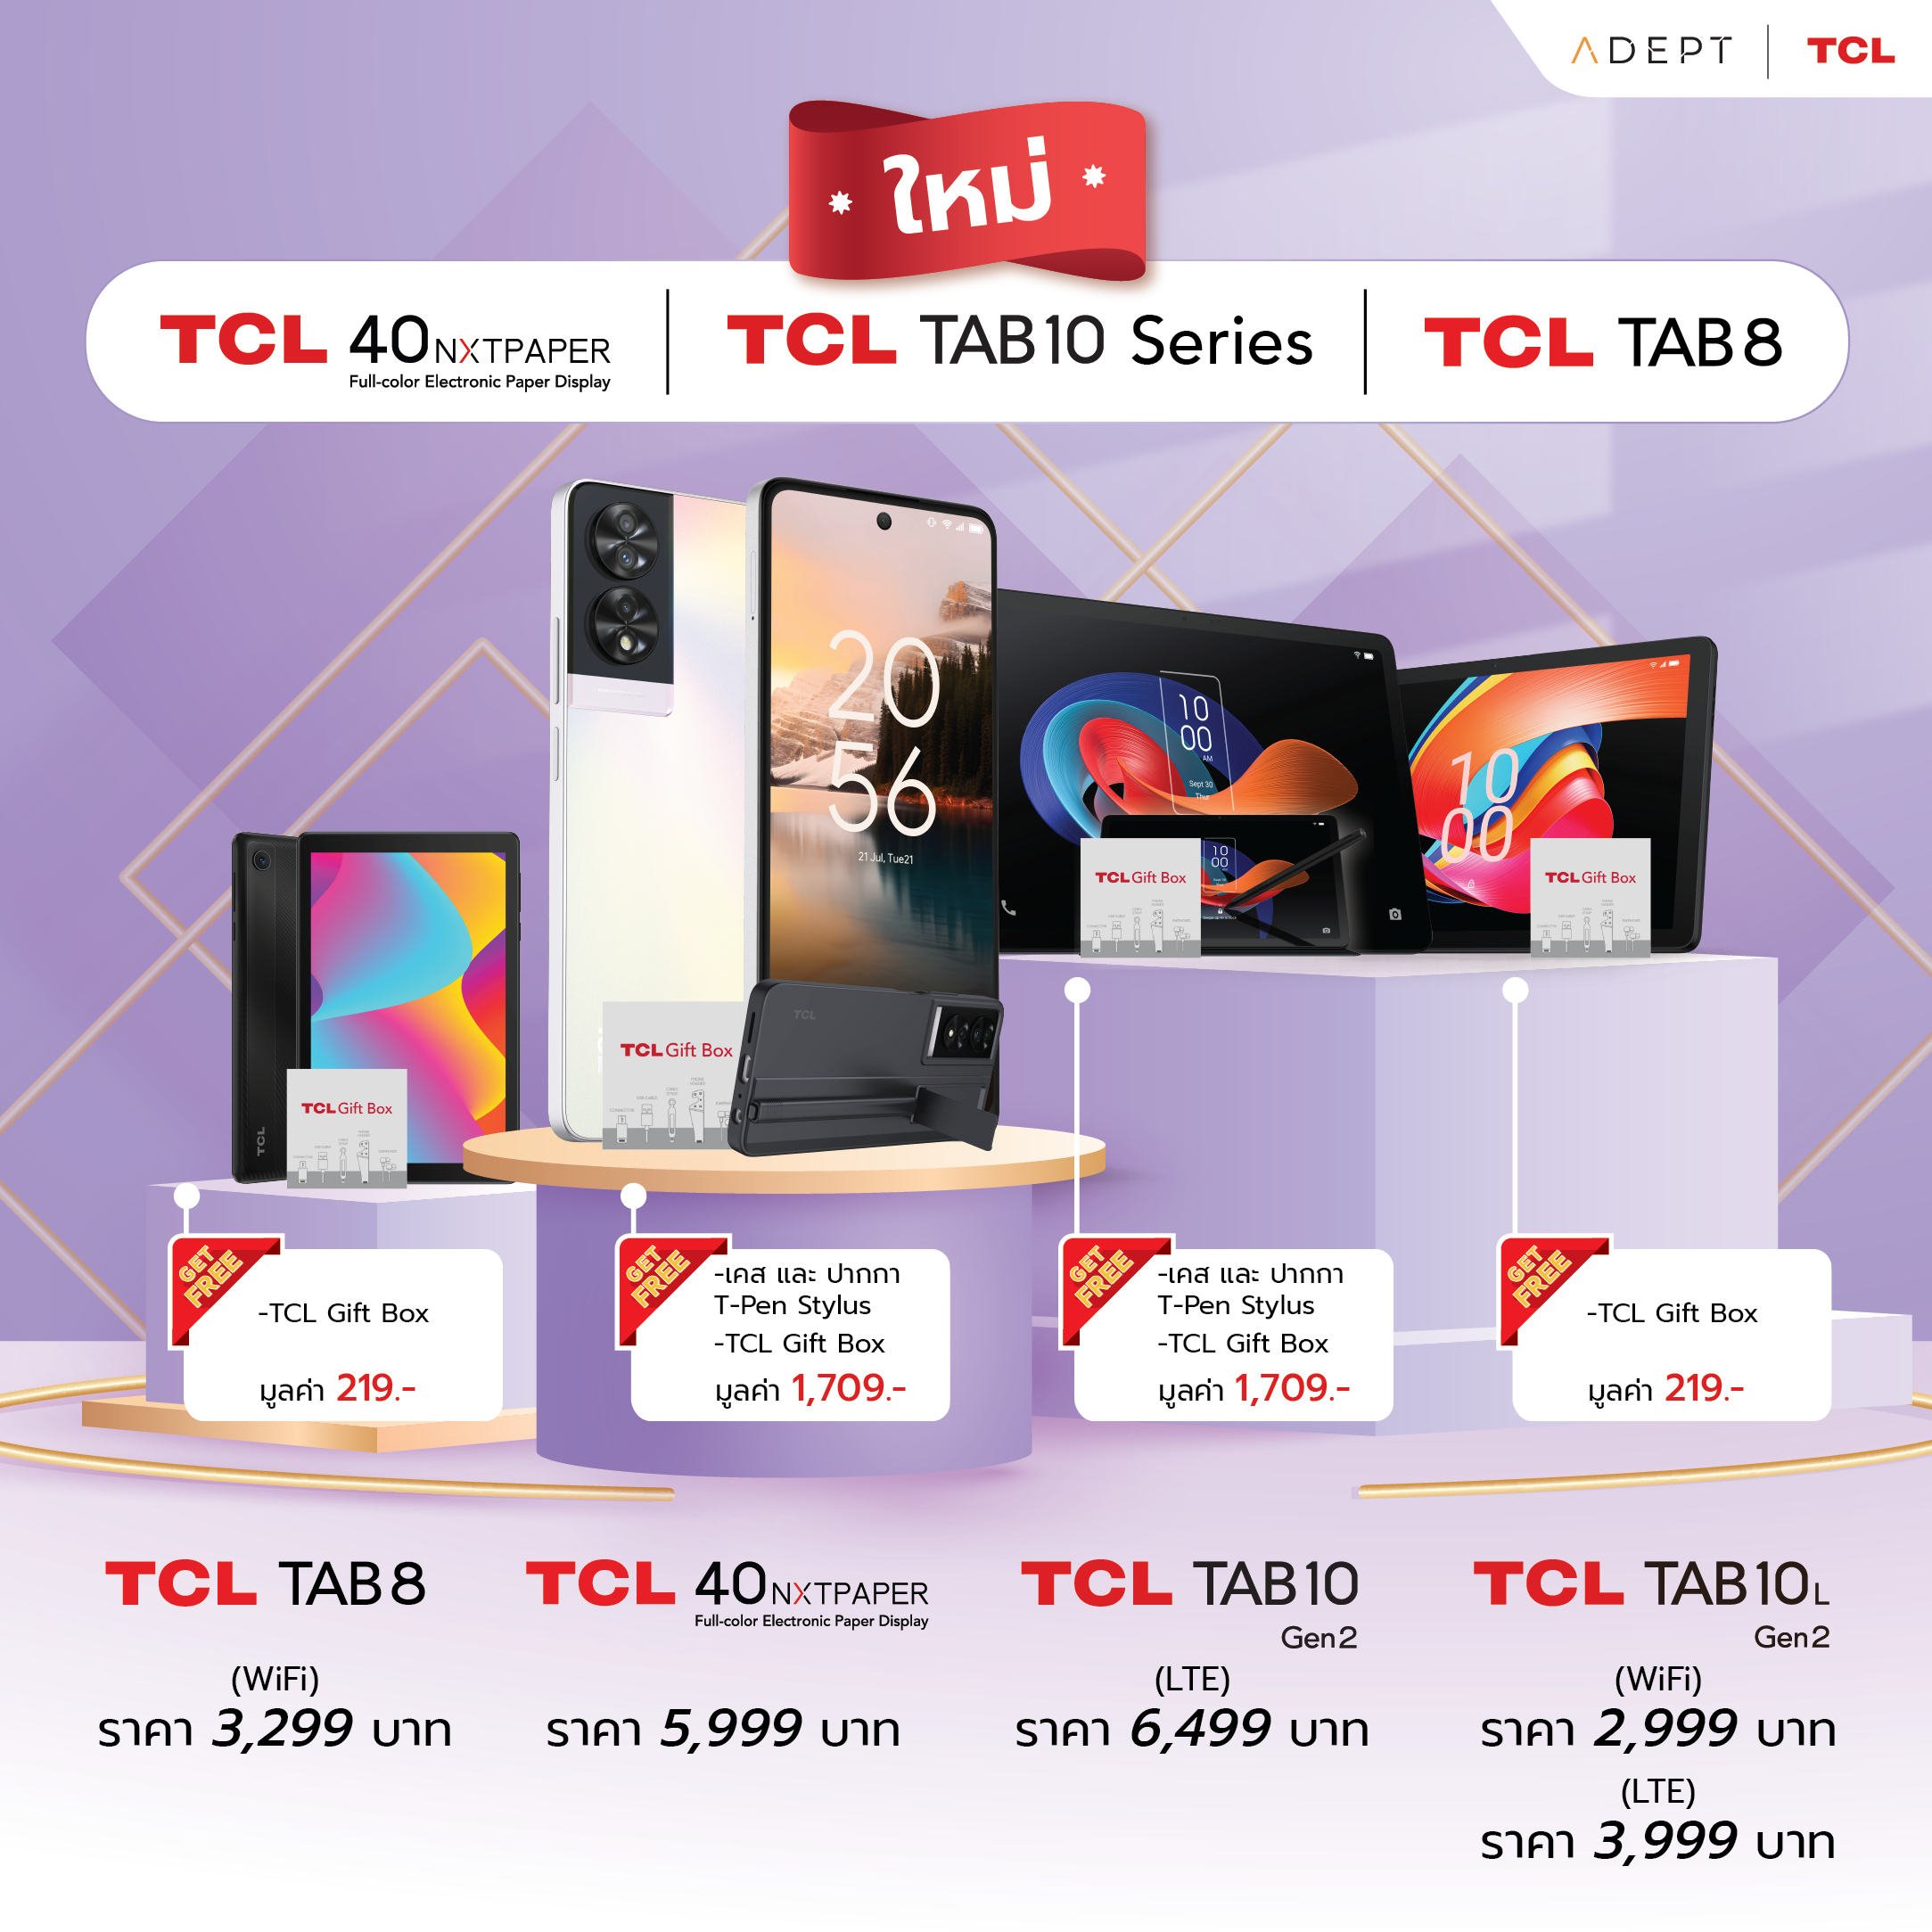 TCL เปิดตัวสมาร์ทโฟน TCL 40NXTPAPER กับเทคโนโลยีถนอมสายตาเจ้าแรก!